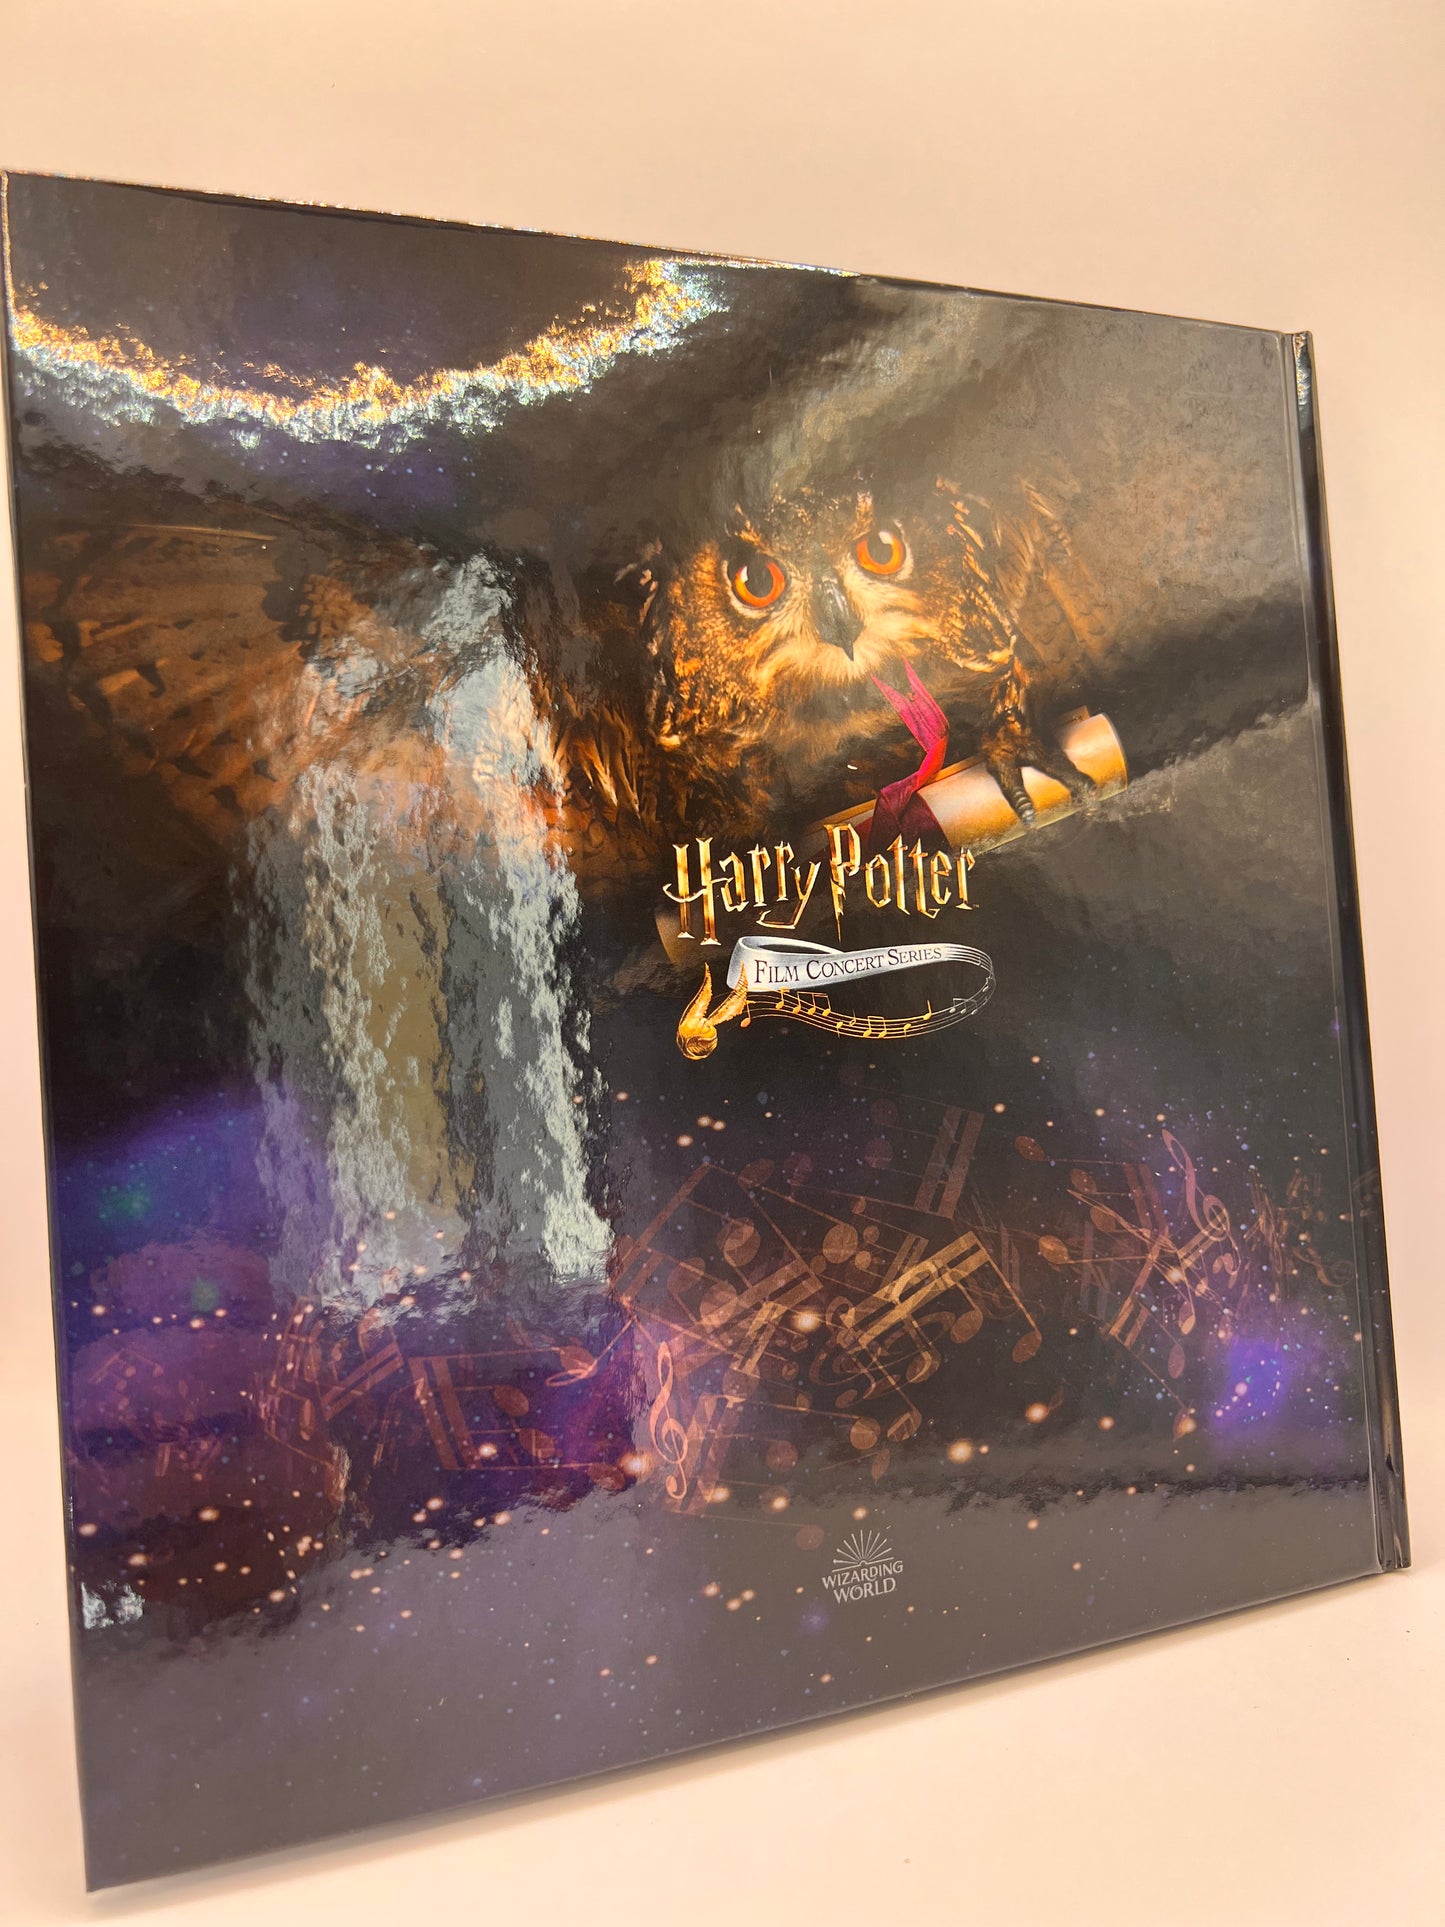 Harry Potter and the Prisoner of Azkaban™ in Concert Hardcover Program Book